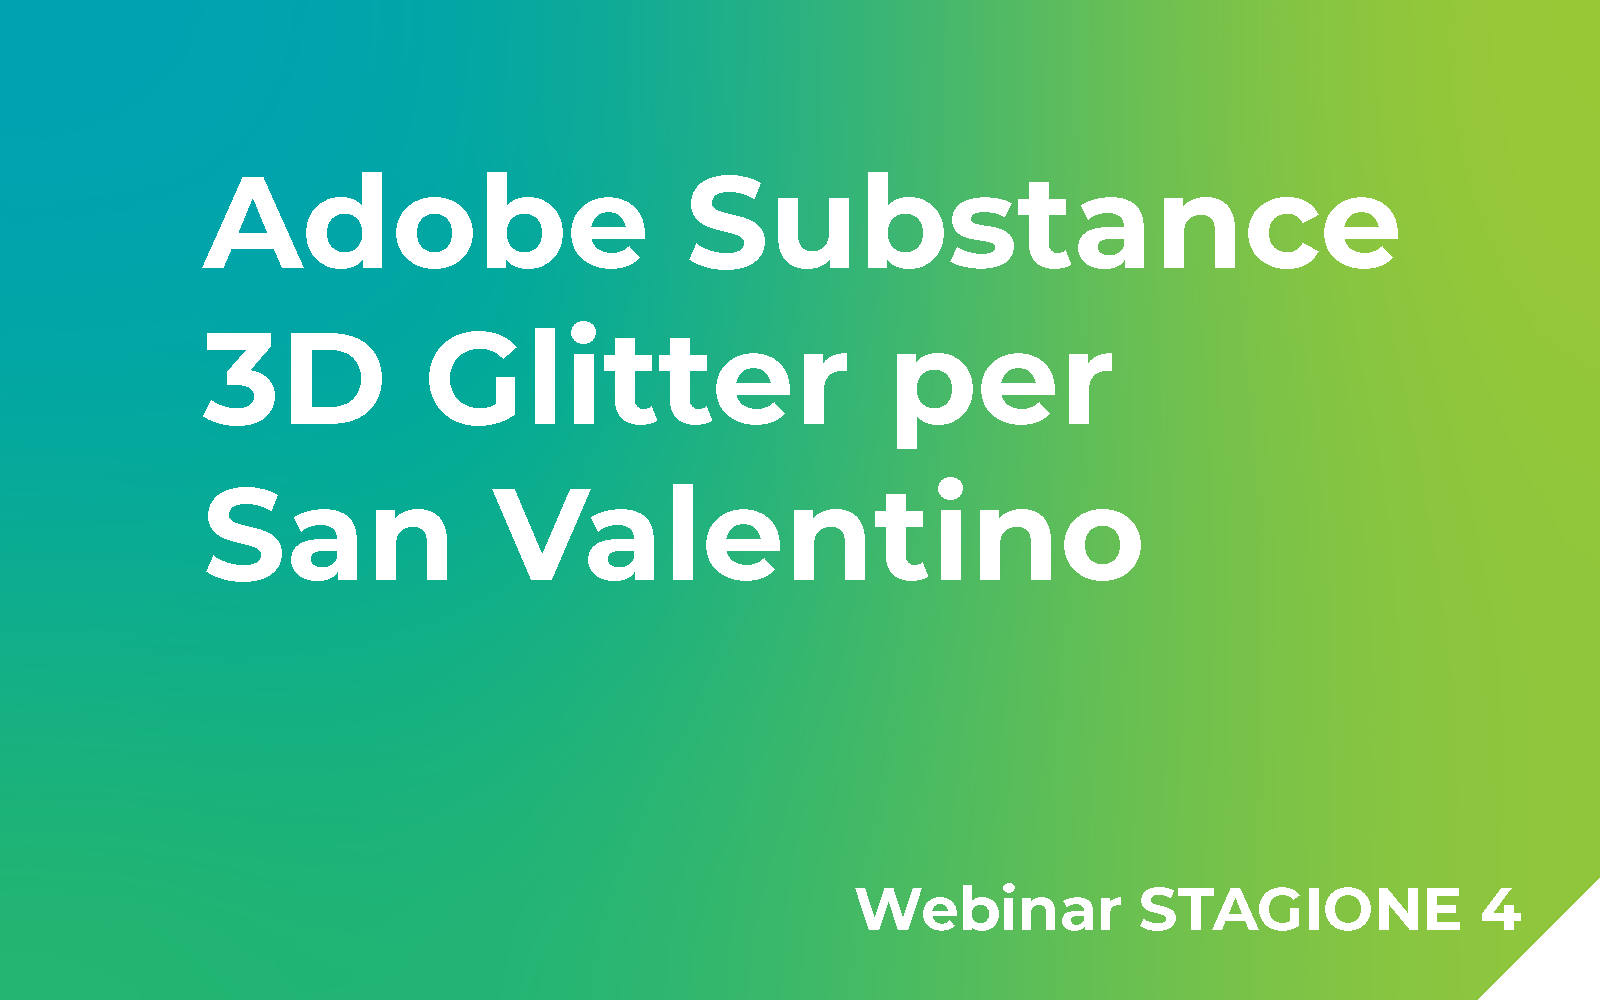 Adobe Substance 3D Glitter per San Valentino